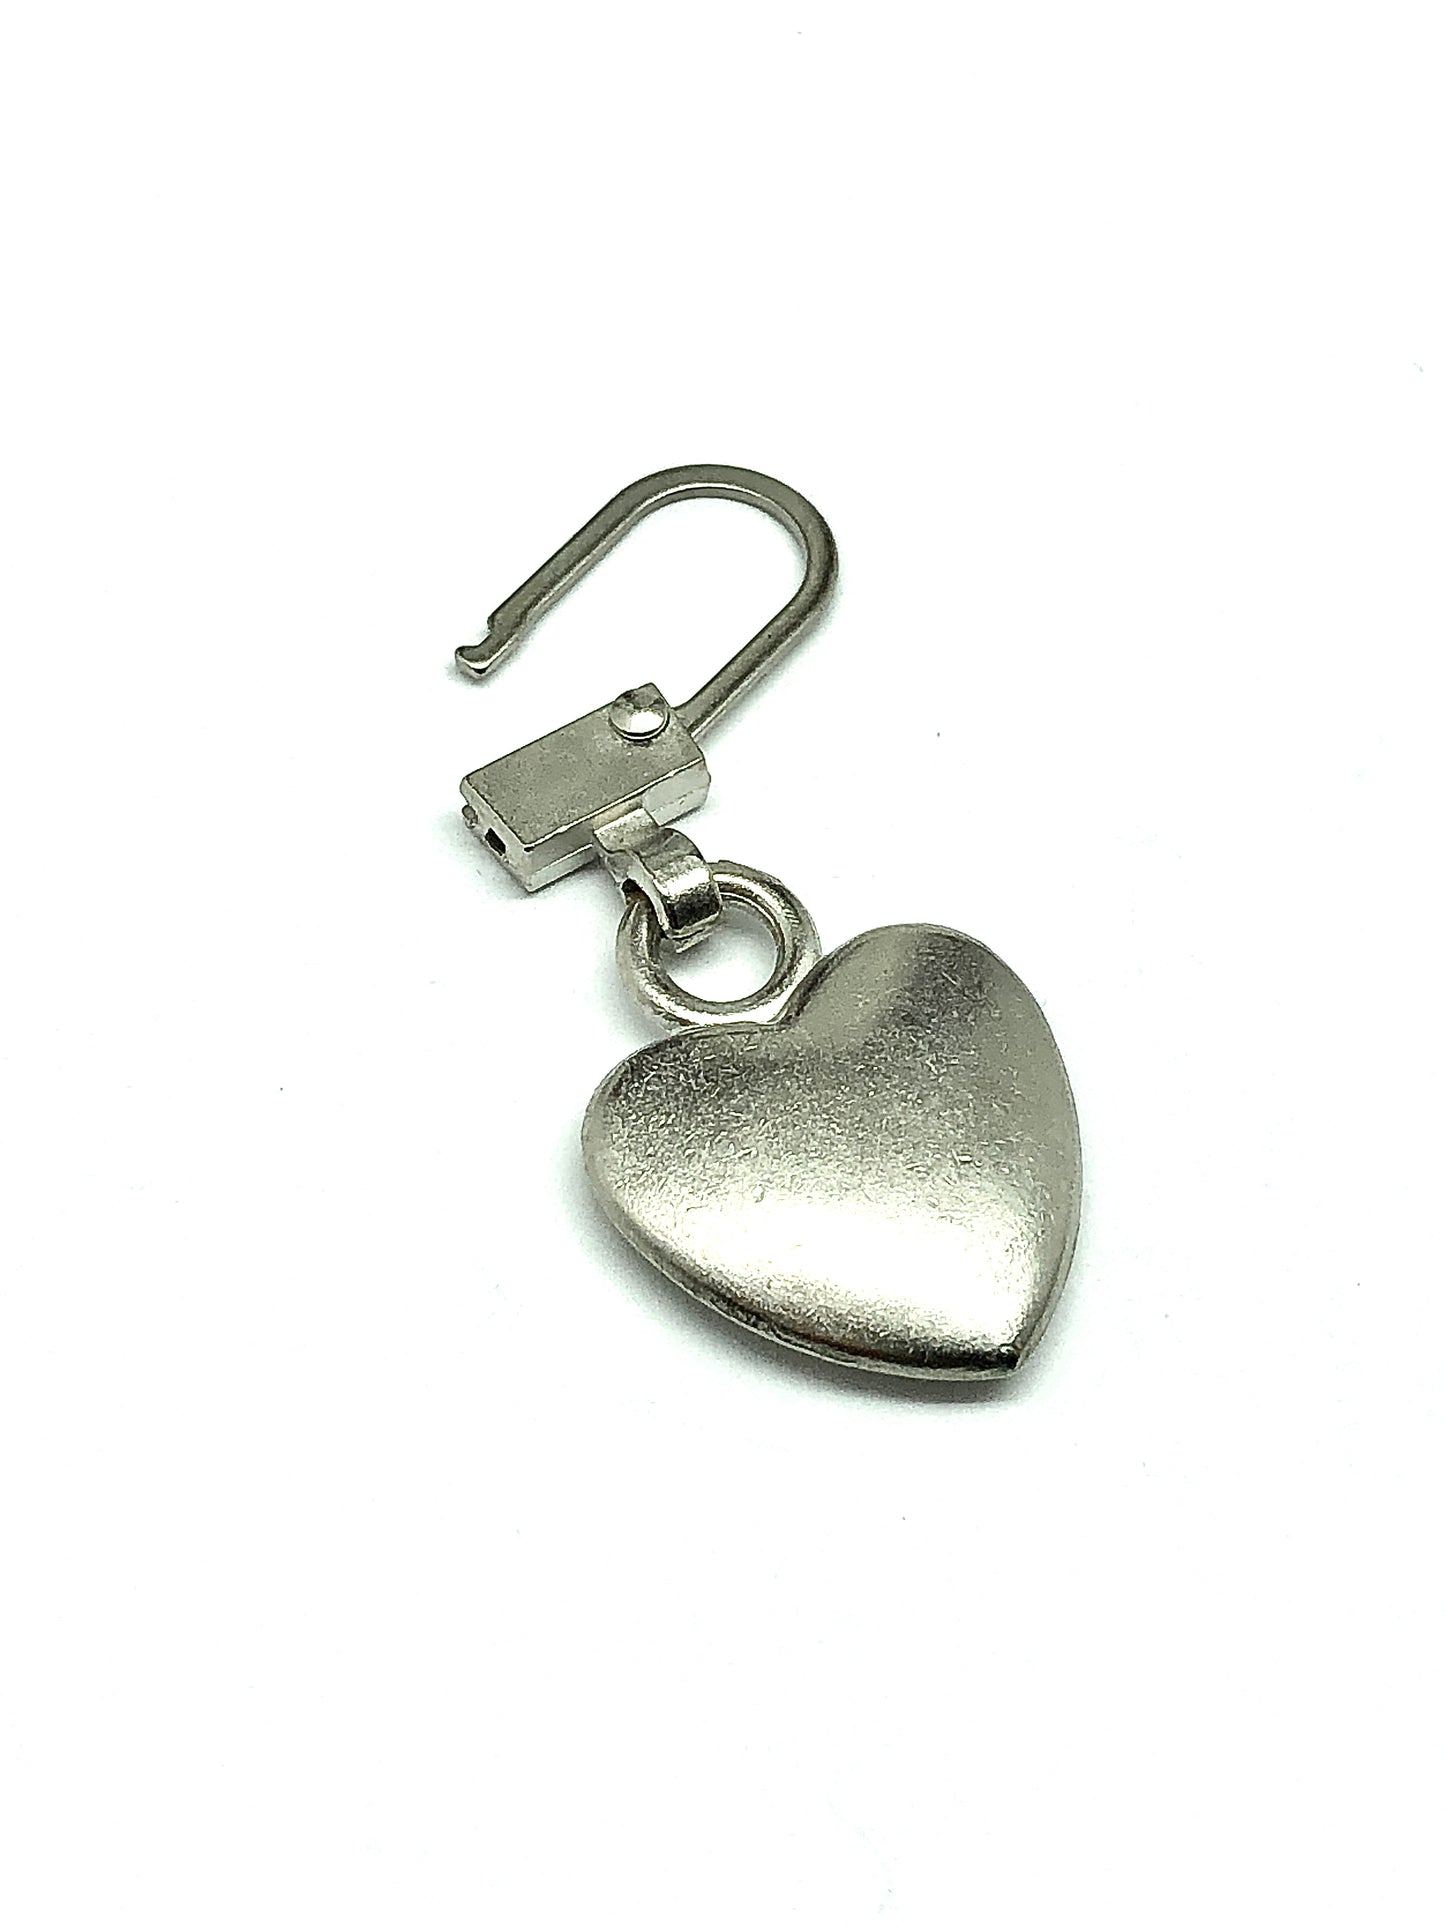 Blingschlingers - Zipper Repair Charm - Rustic Silver Heart Zipper Pull Charm | Accessorize anything